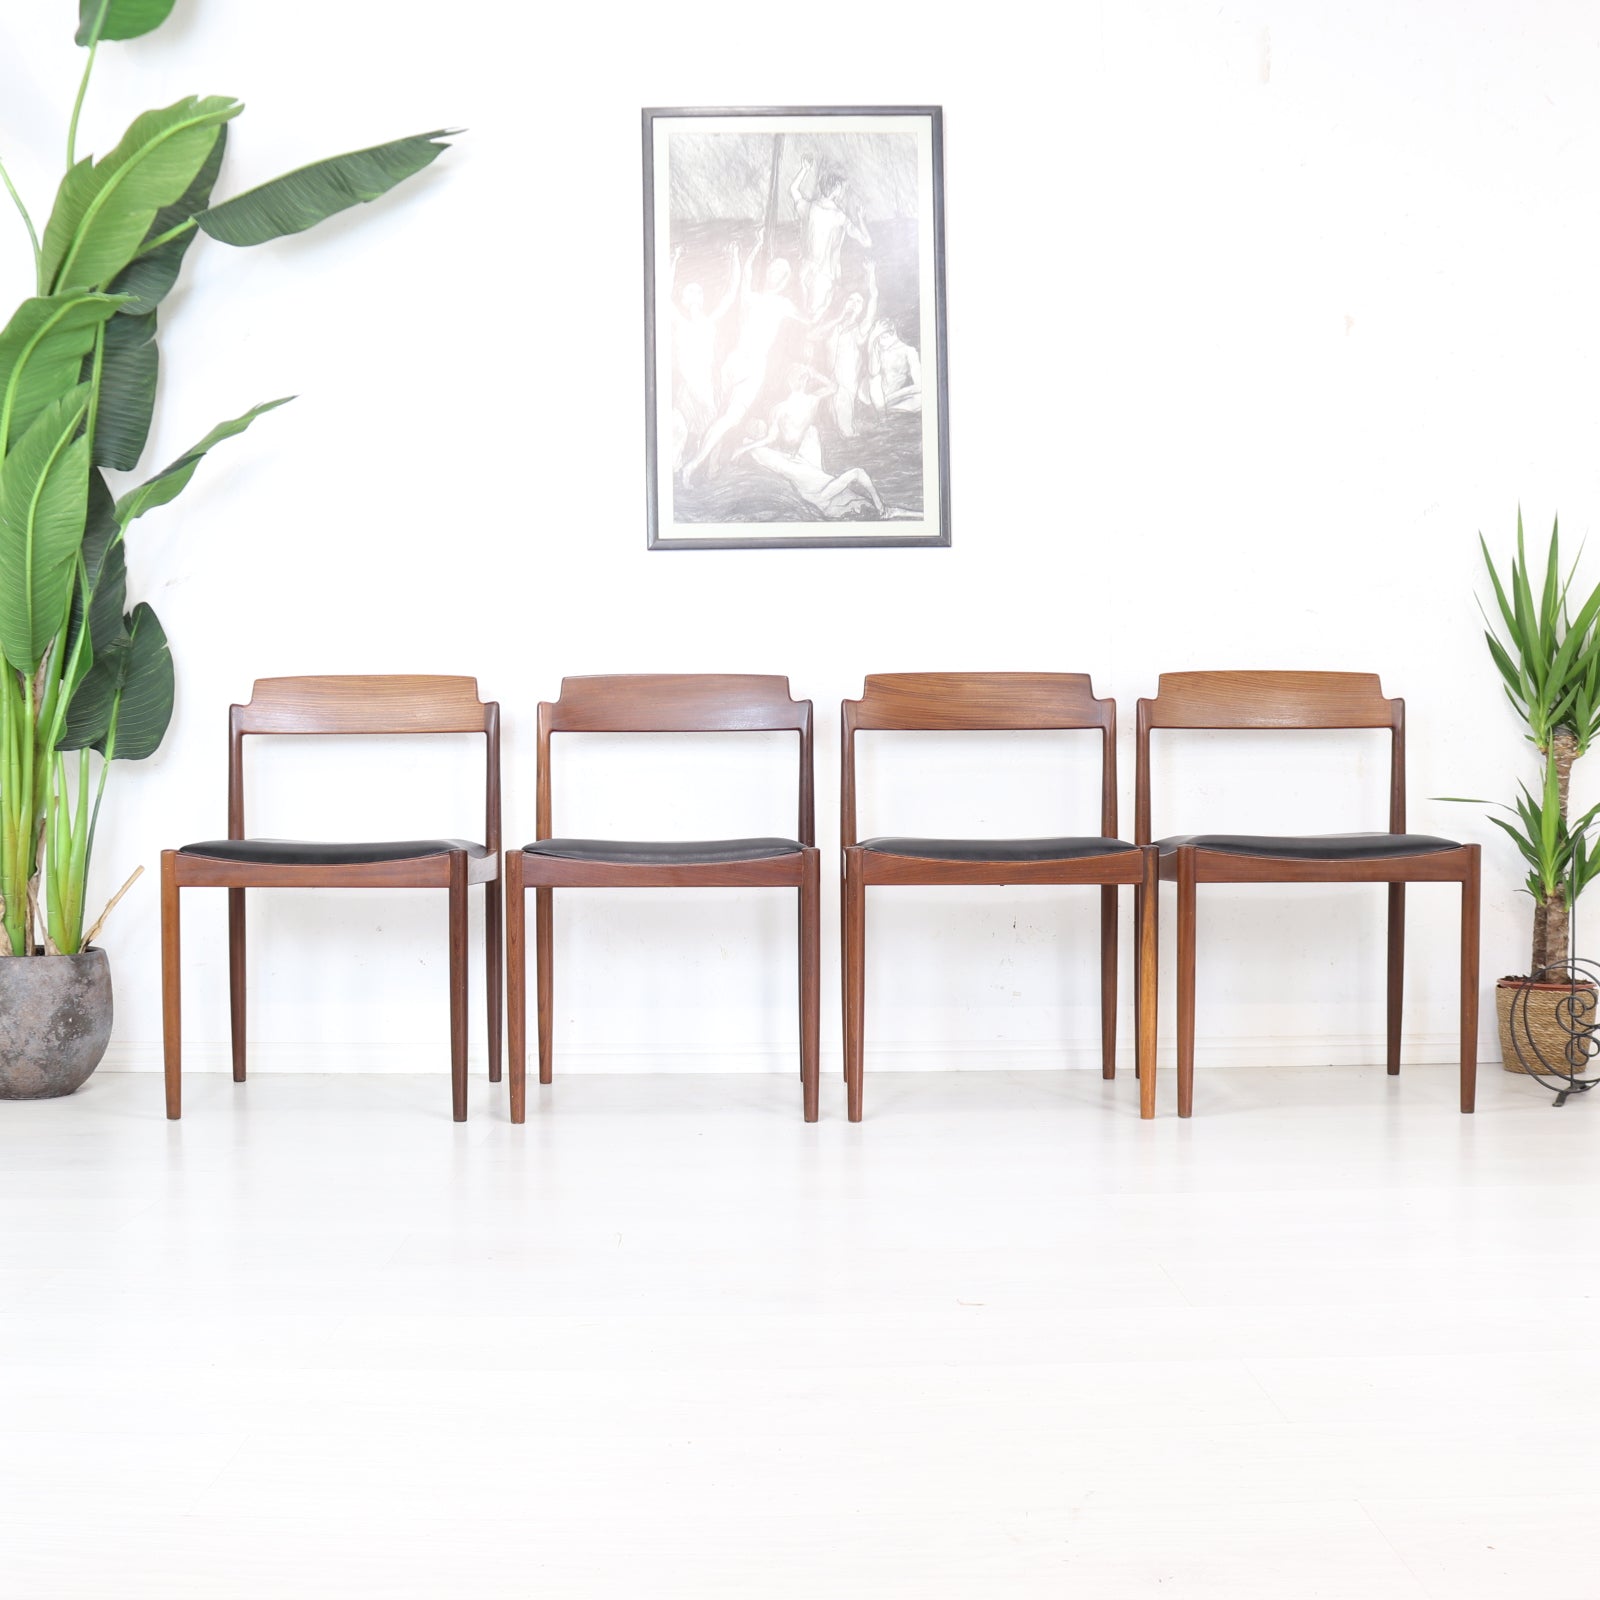 G Plan Danish Design Dining Chairs by Kofod Larsen - teakyfinders